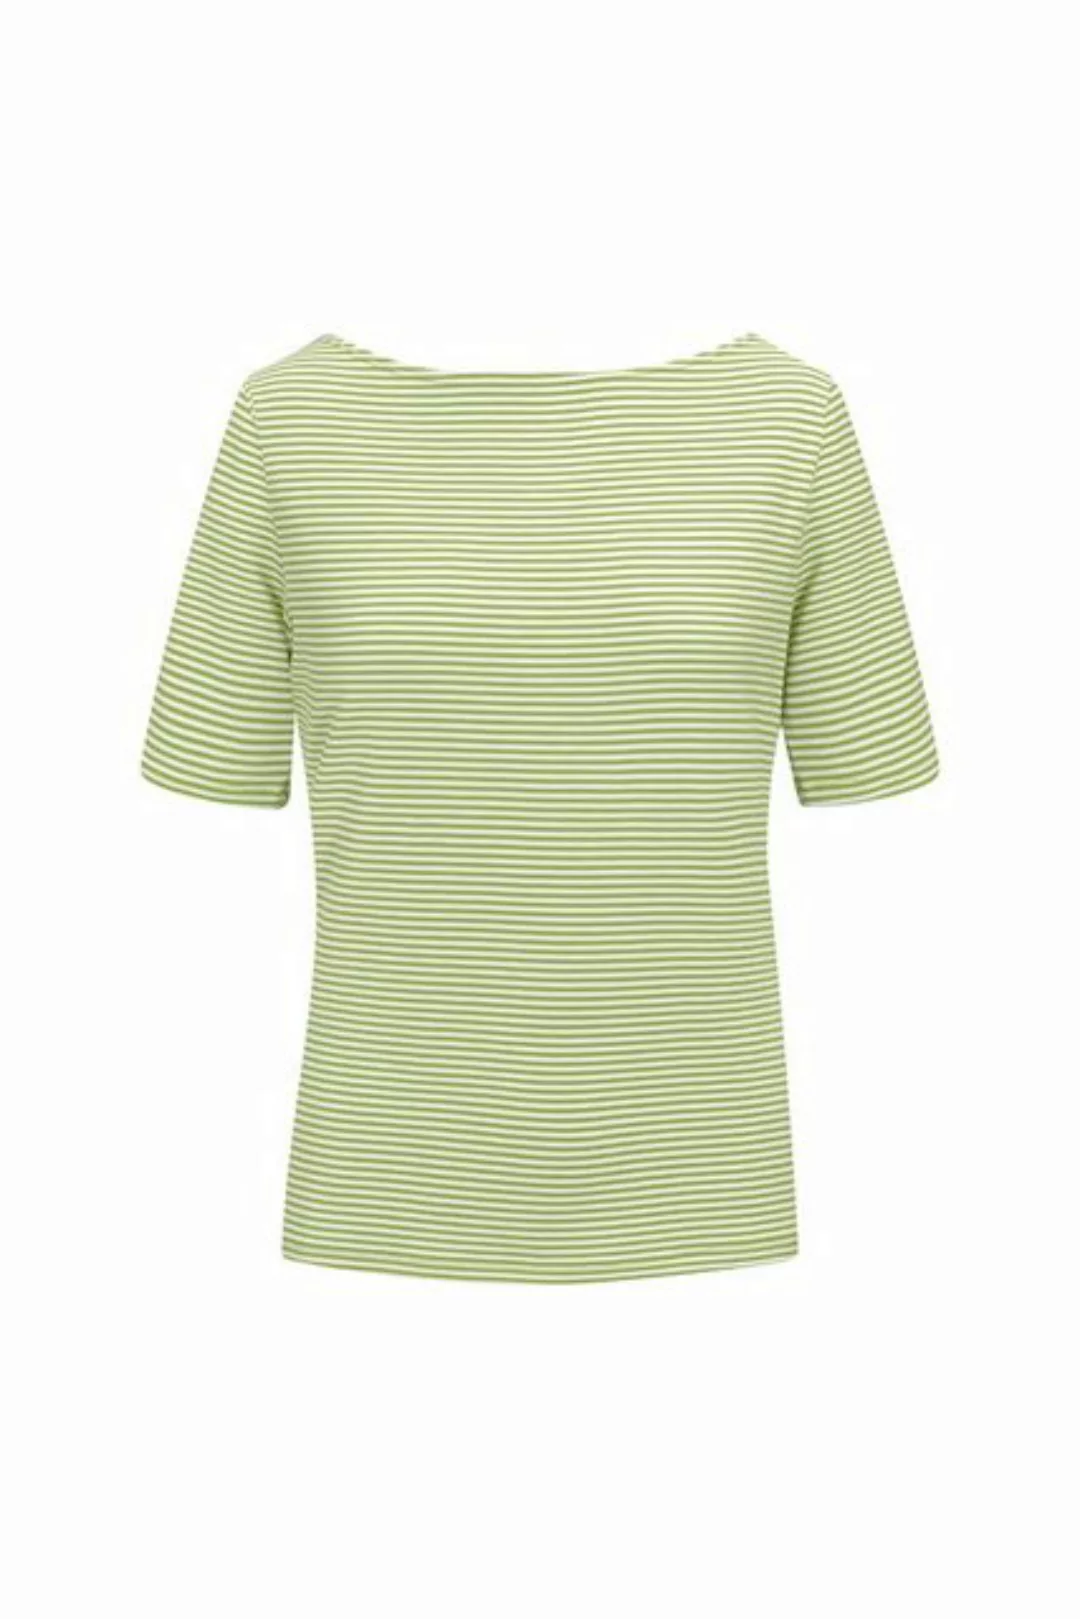 Longtop Tjessy Short Sleeve Top Little Sumo Stripe Bright Green M günstig online kaufen